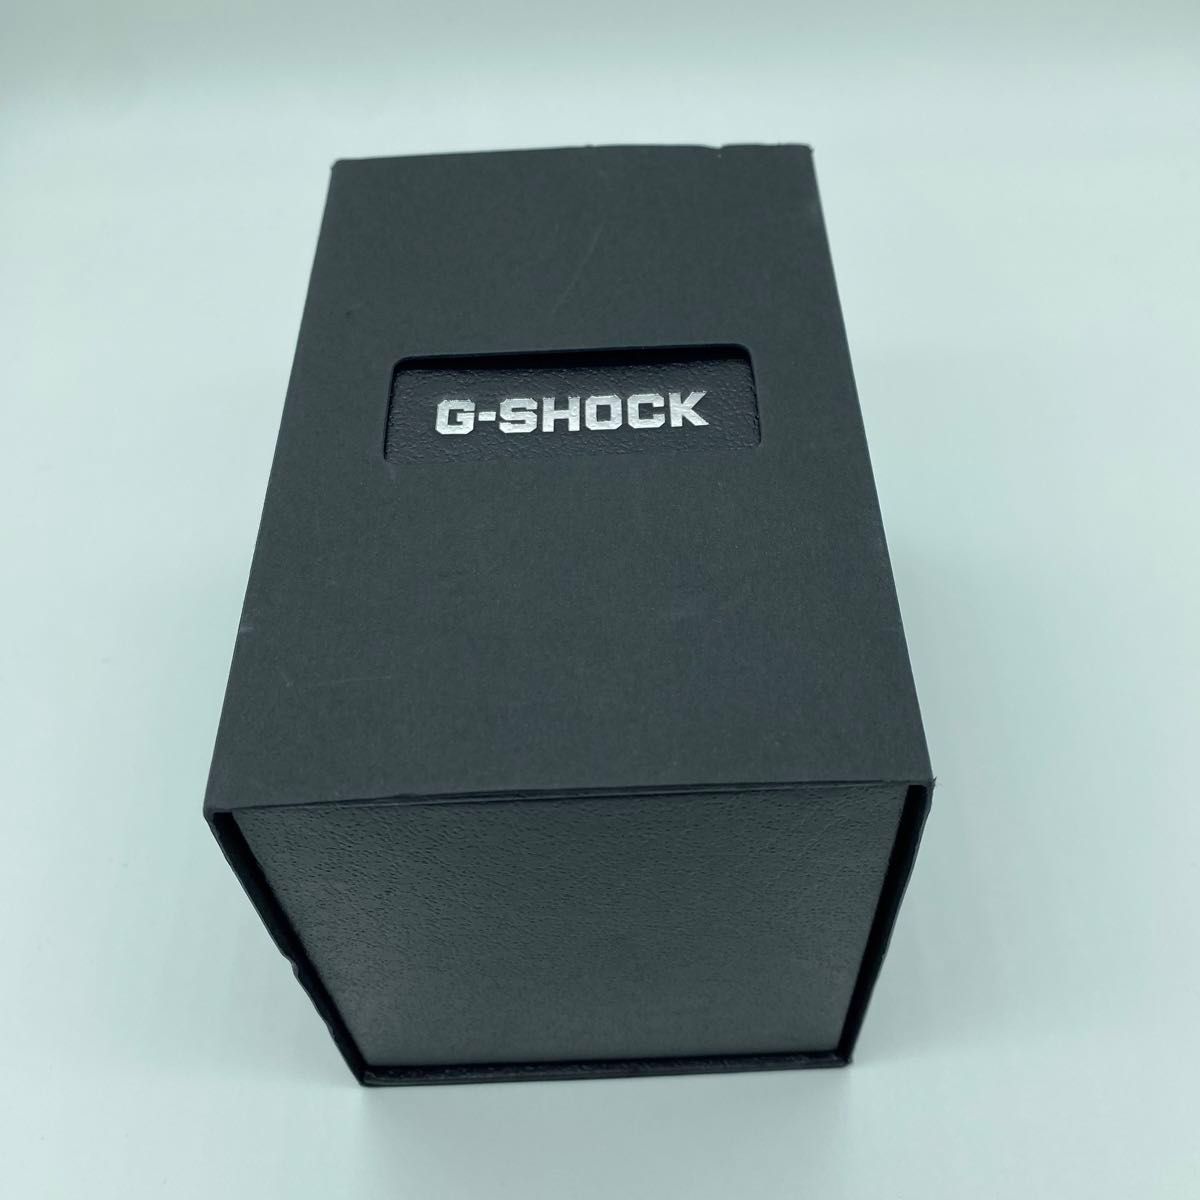 CASIO G-SHOCK GW-M5610U ブラック 電波ソーラー